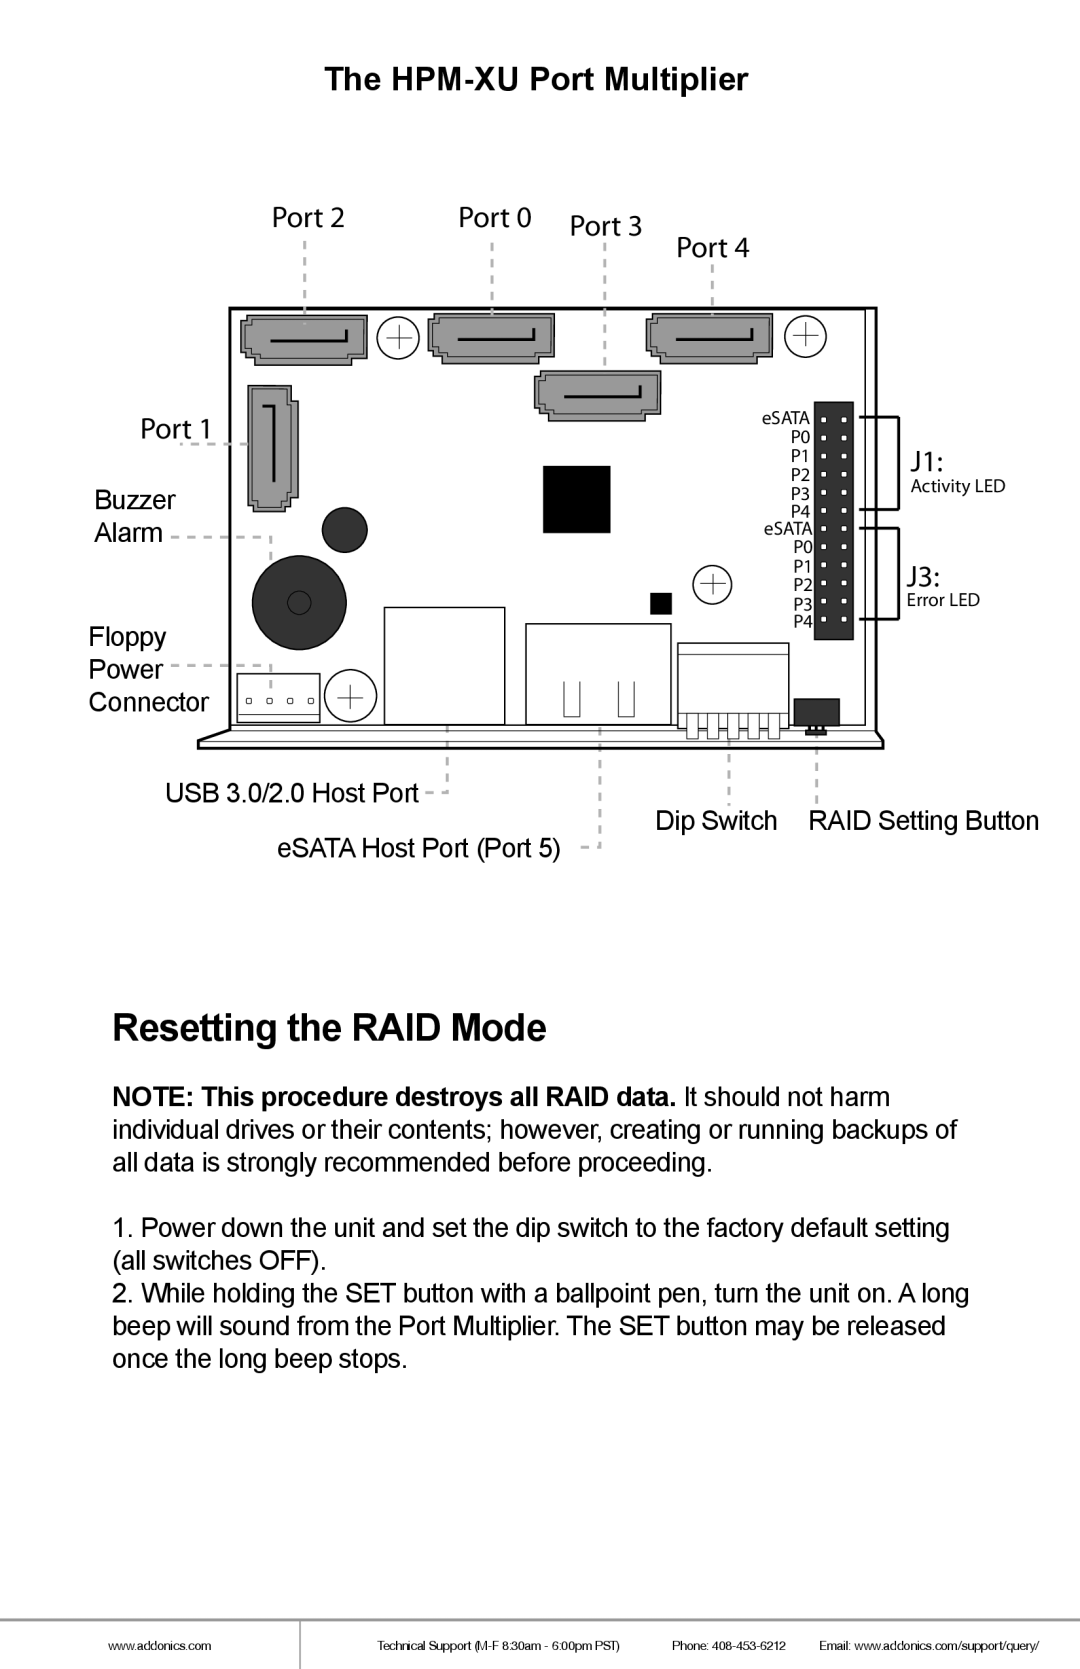 Addonics Technologies RTM2233EU3 manual Resetting the RAID Mode, The HPM-XU Port Multiplier, Port 0 Port 